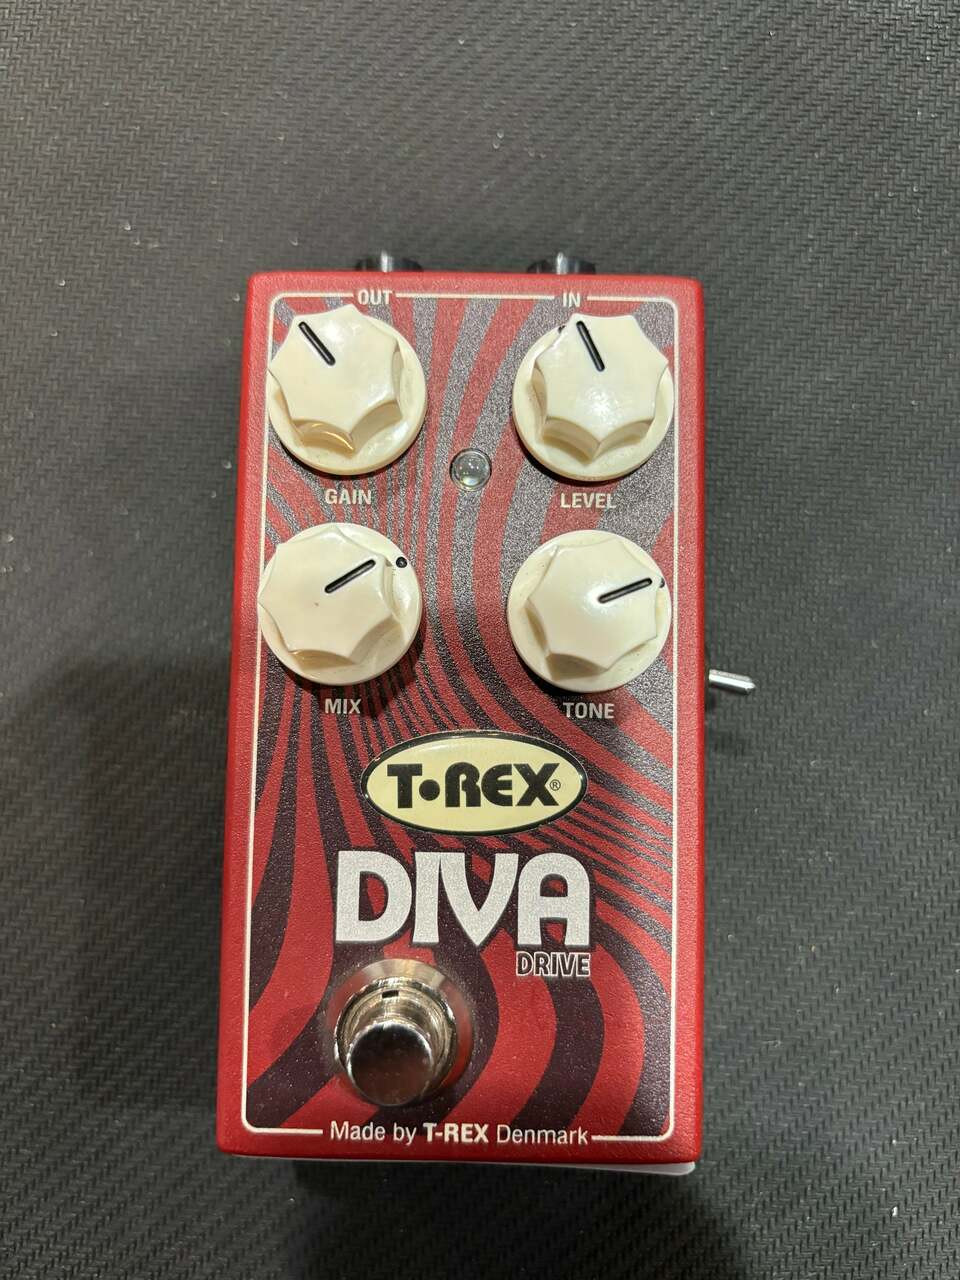 T-Rex Diva Drive - Moms Music